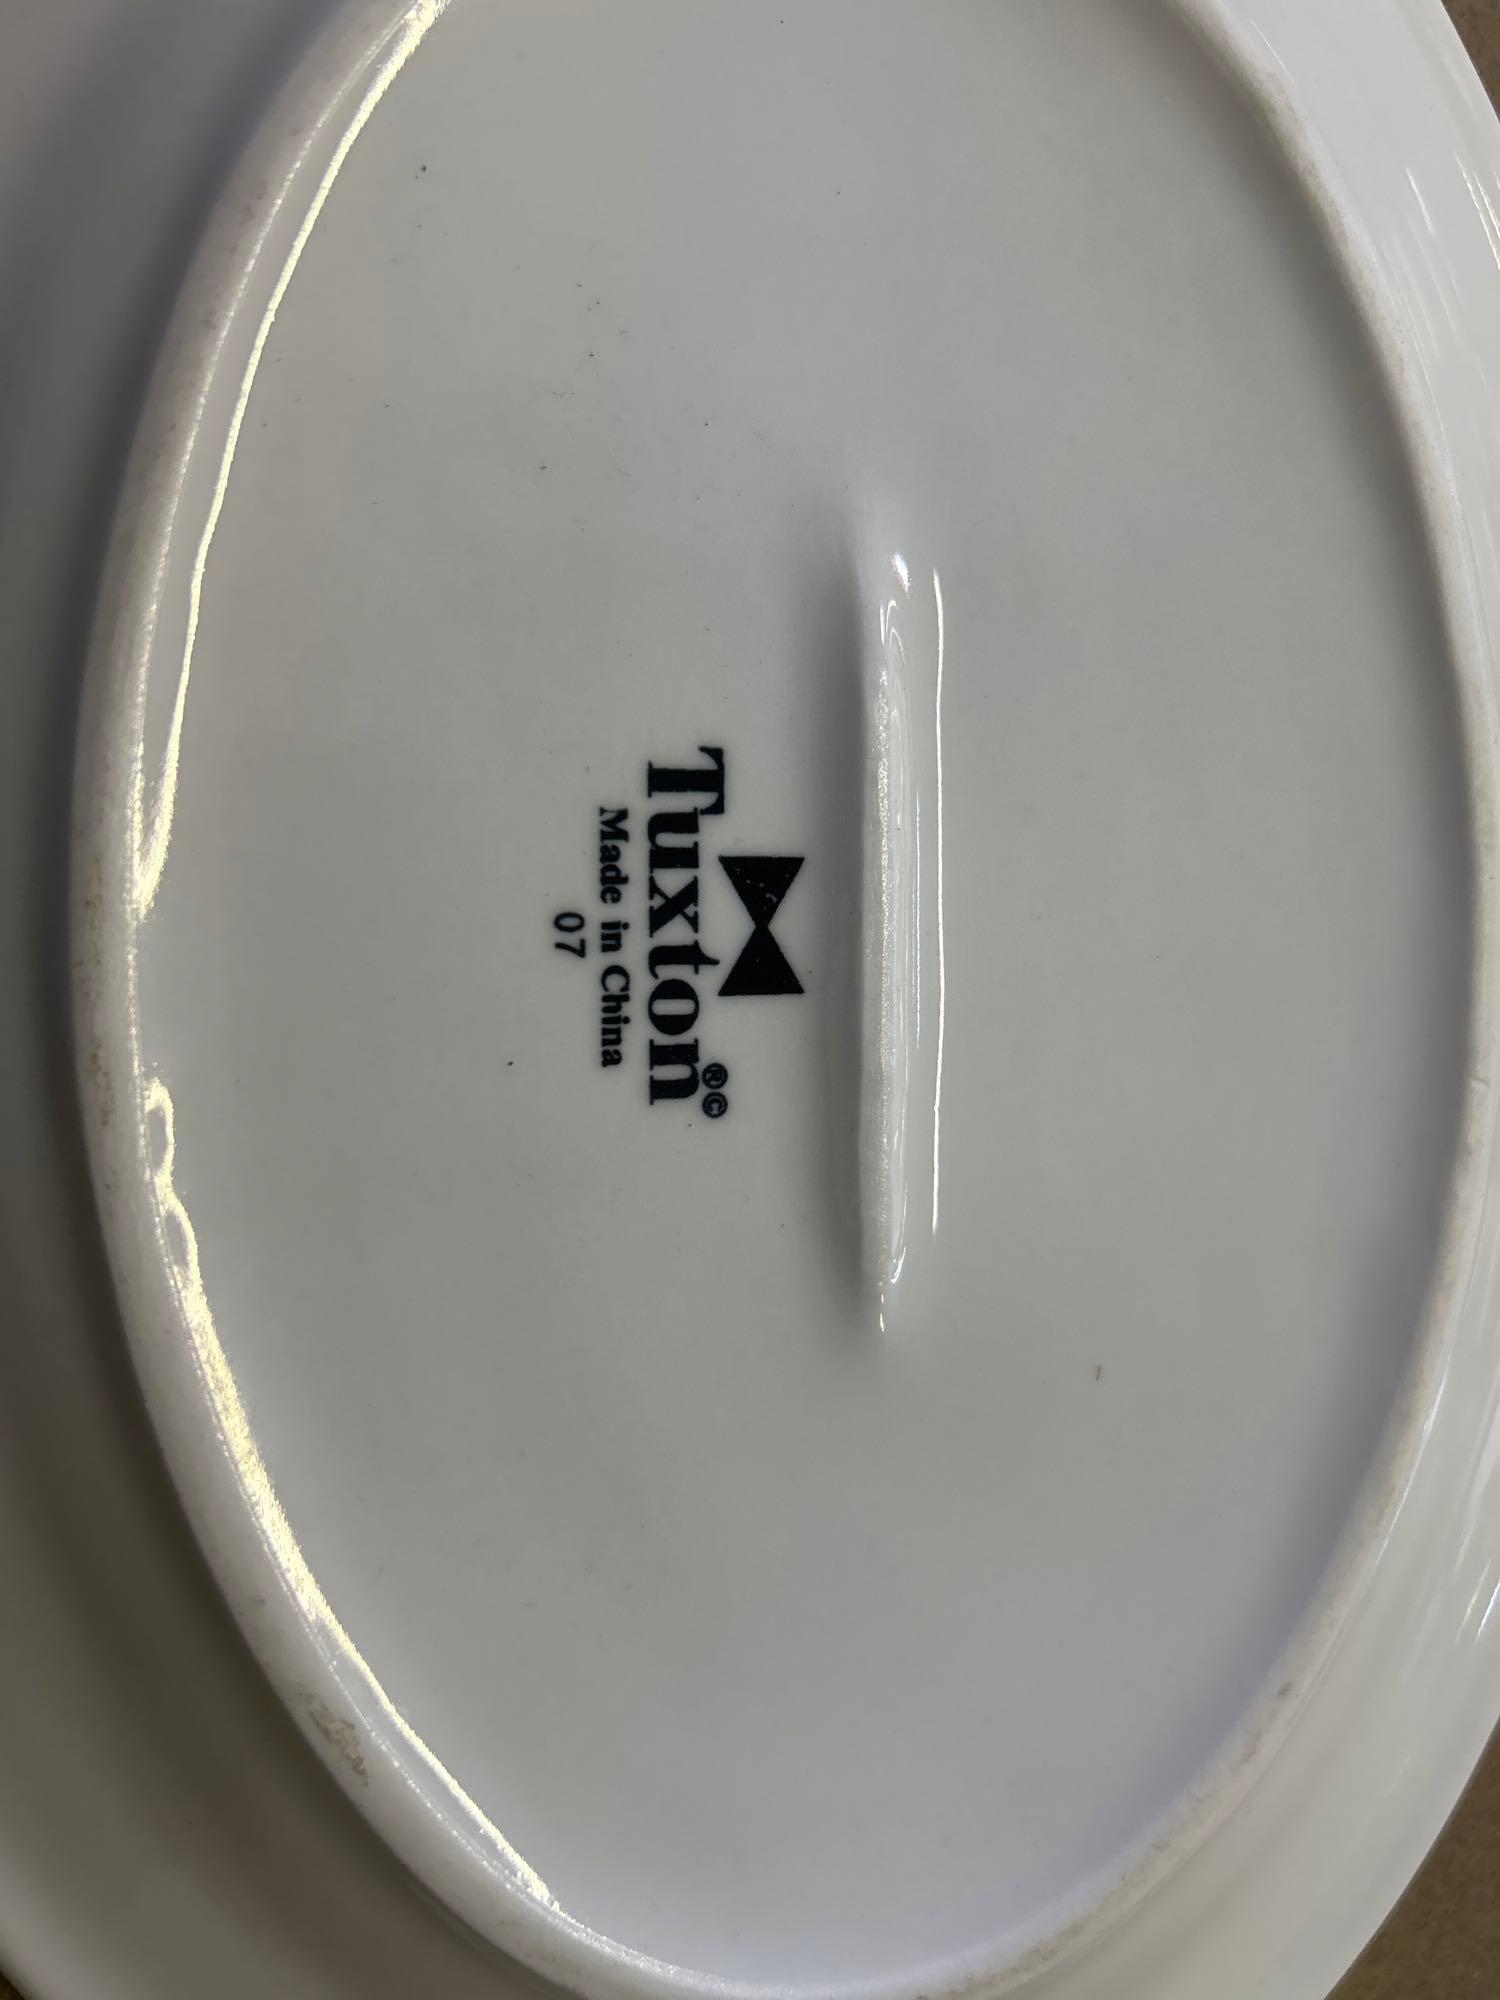 Tuxton 10 in. Oval Porcelain Platters